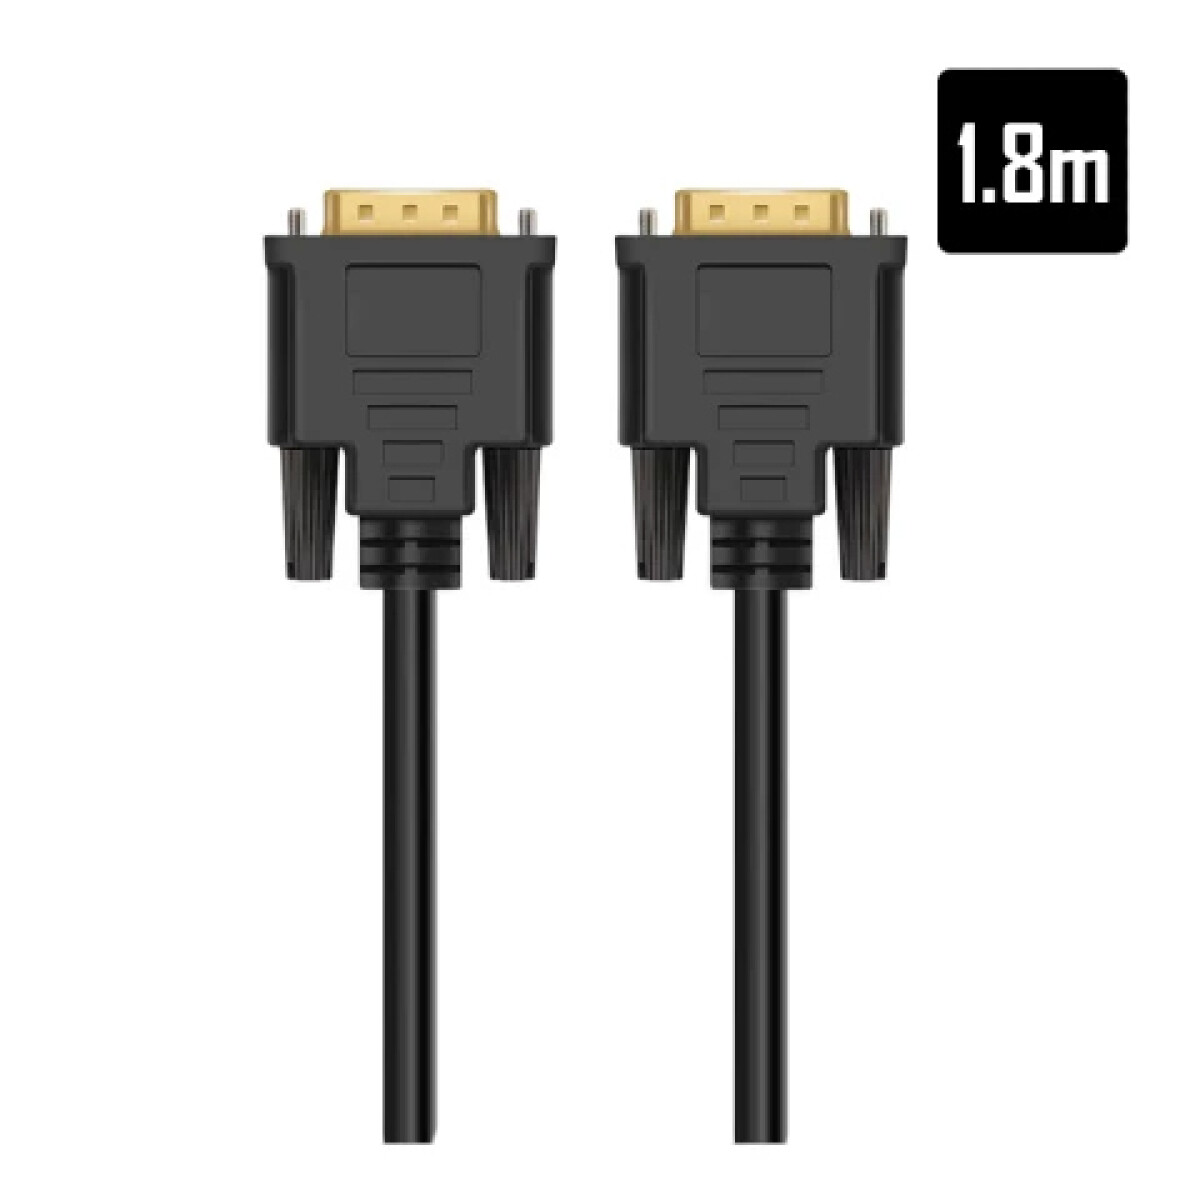 Cable DVI M/M 24+1 pin 1.8M - Unica 